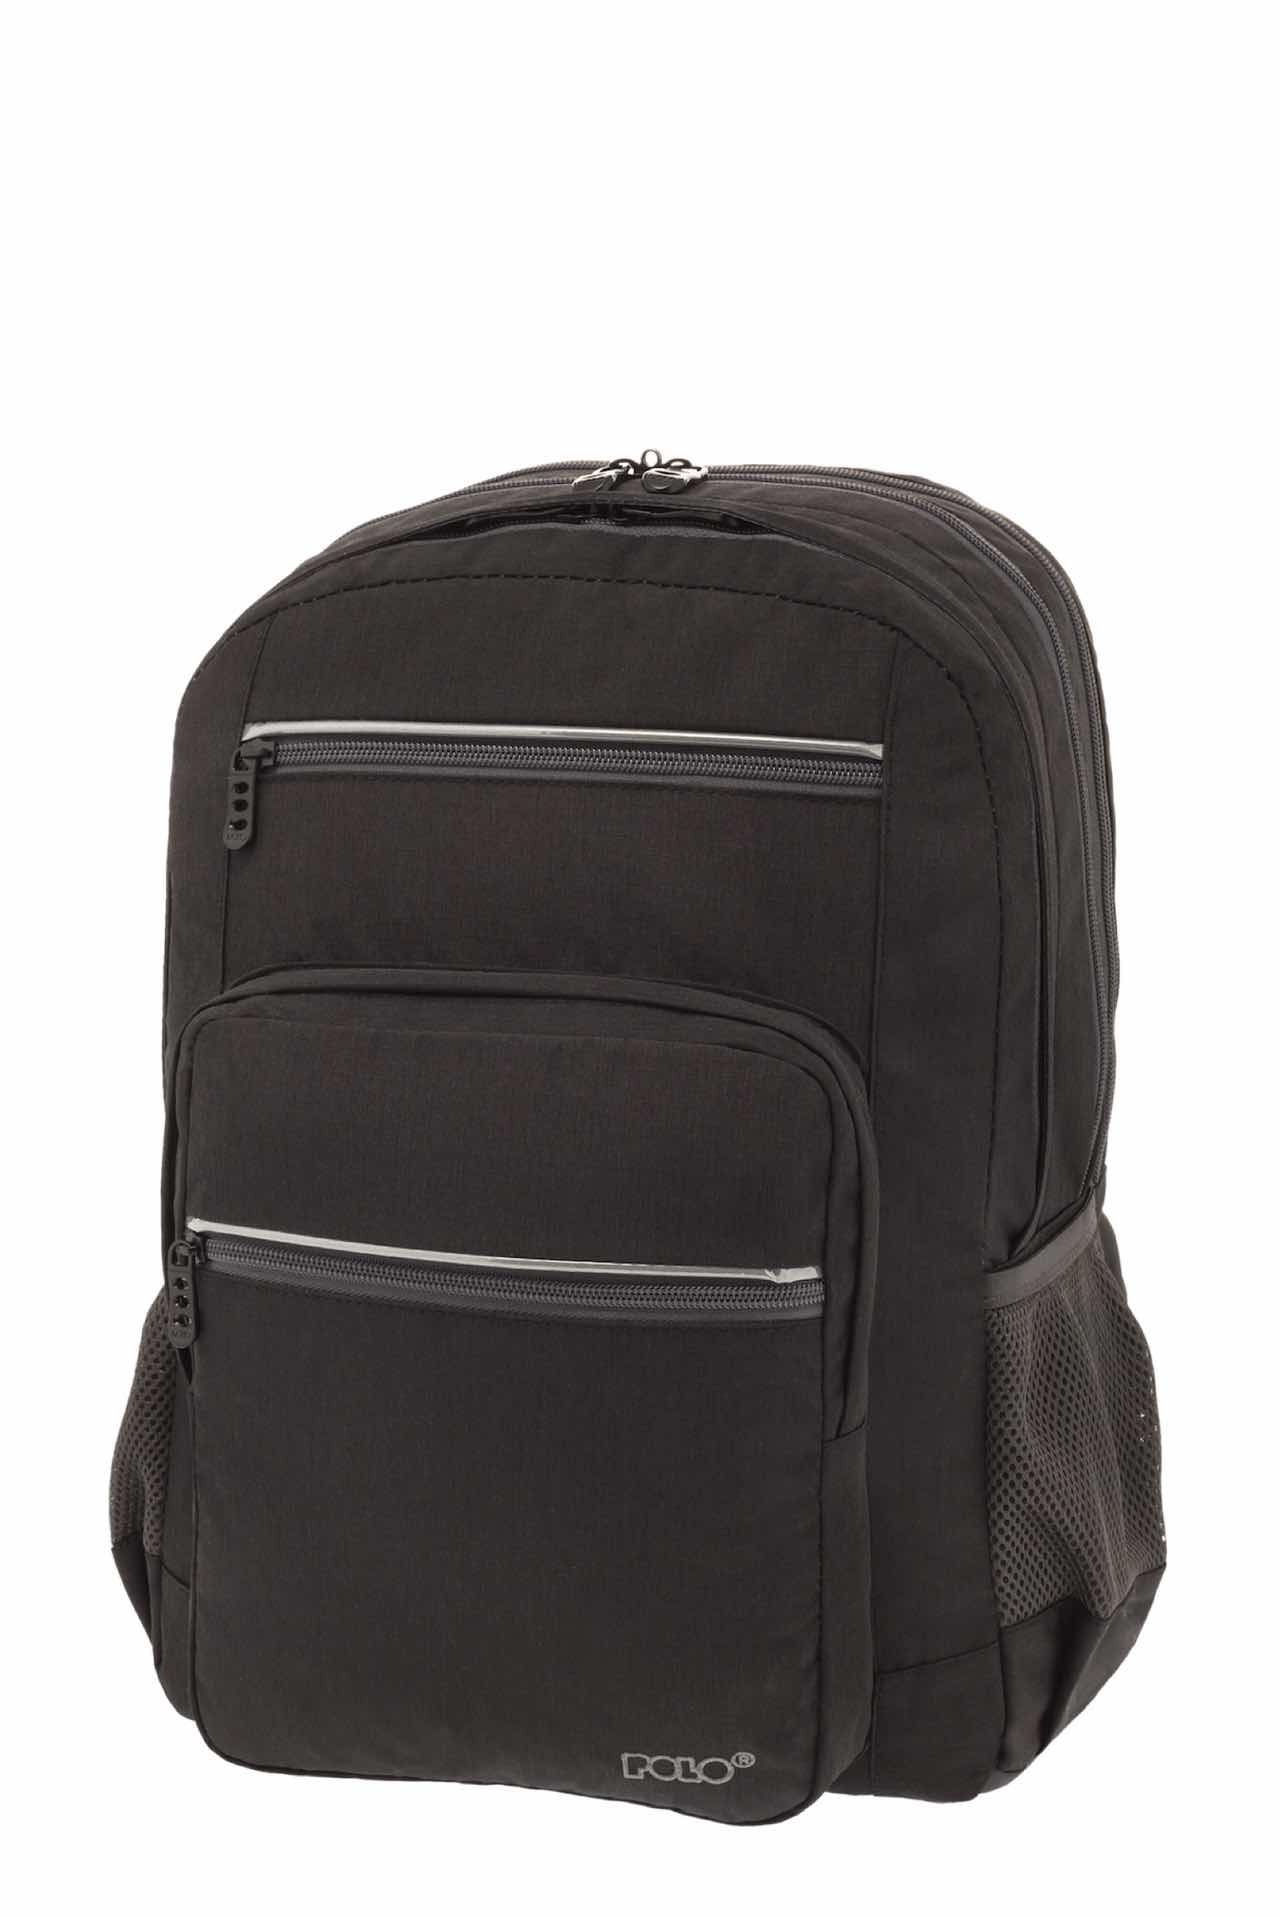 polo-blazer-backpack-9-01-233-02.jpg